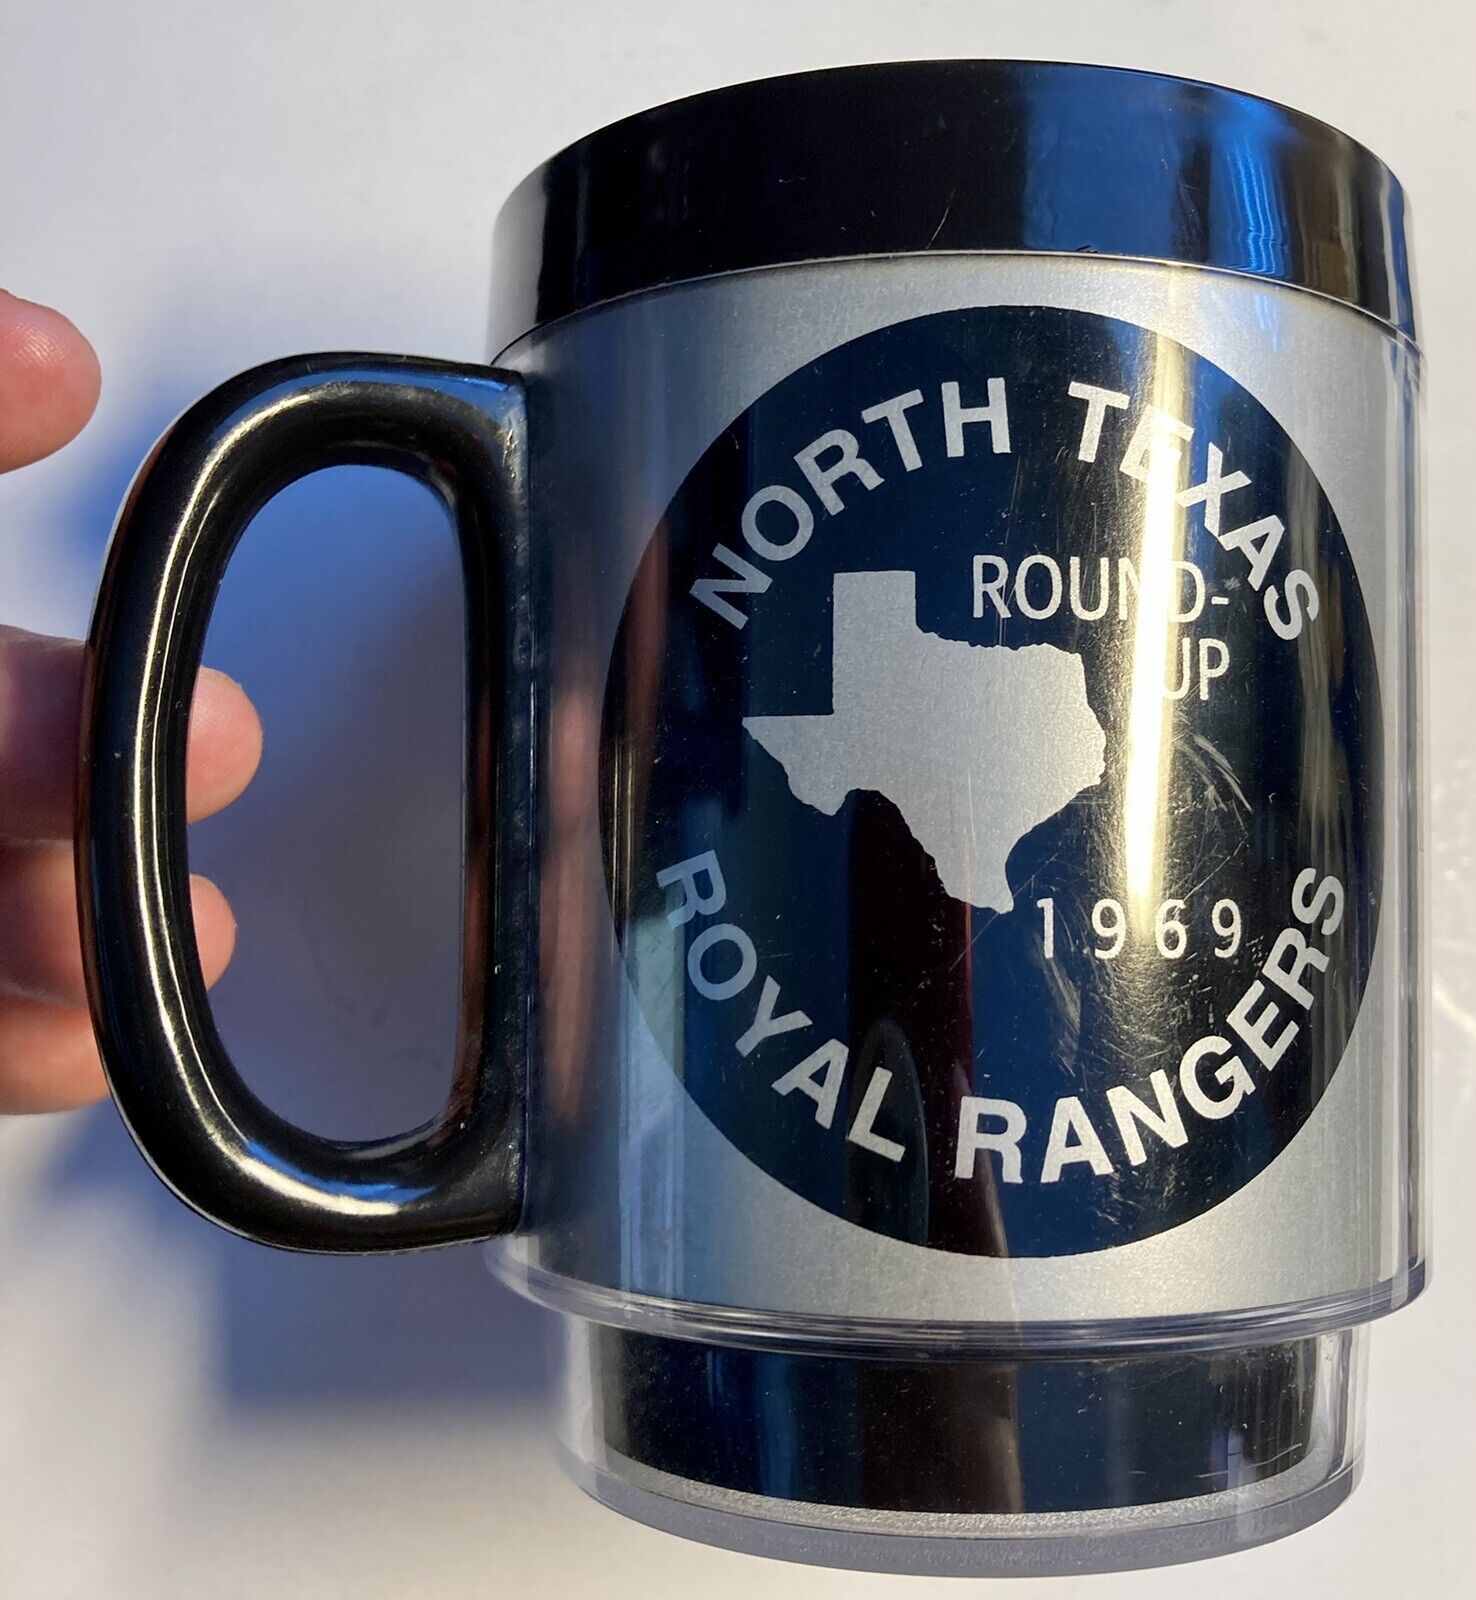 ROYAL RANGERS Coffee Cup Mug North Texas Roundup 1969 Pow Wow 20 Years 1989